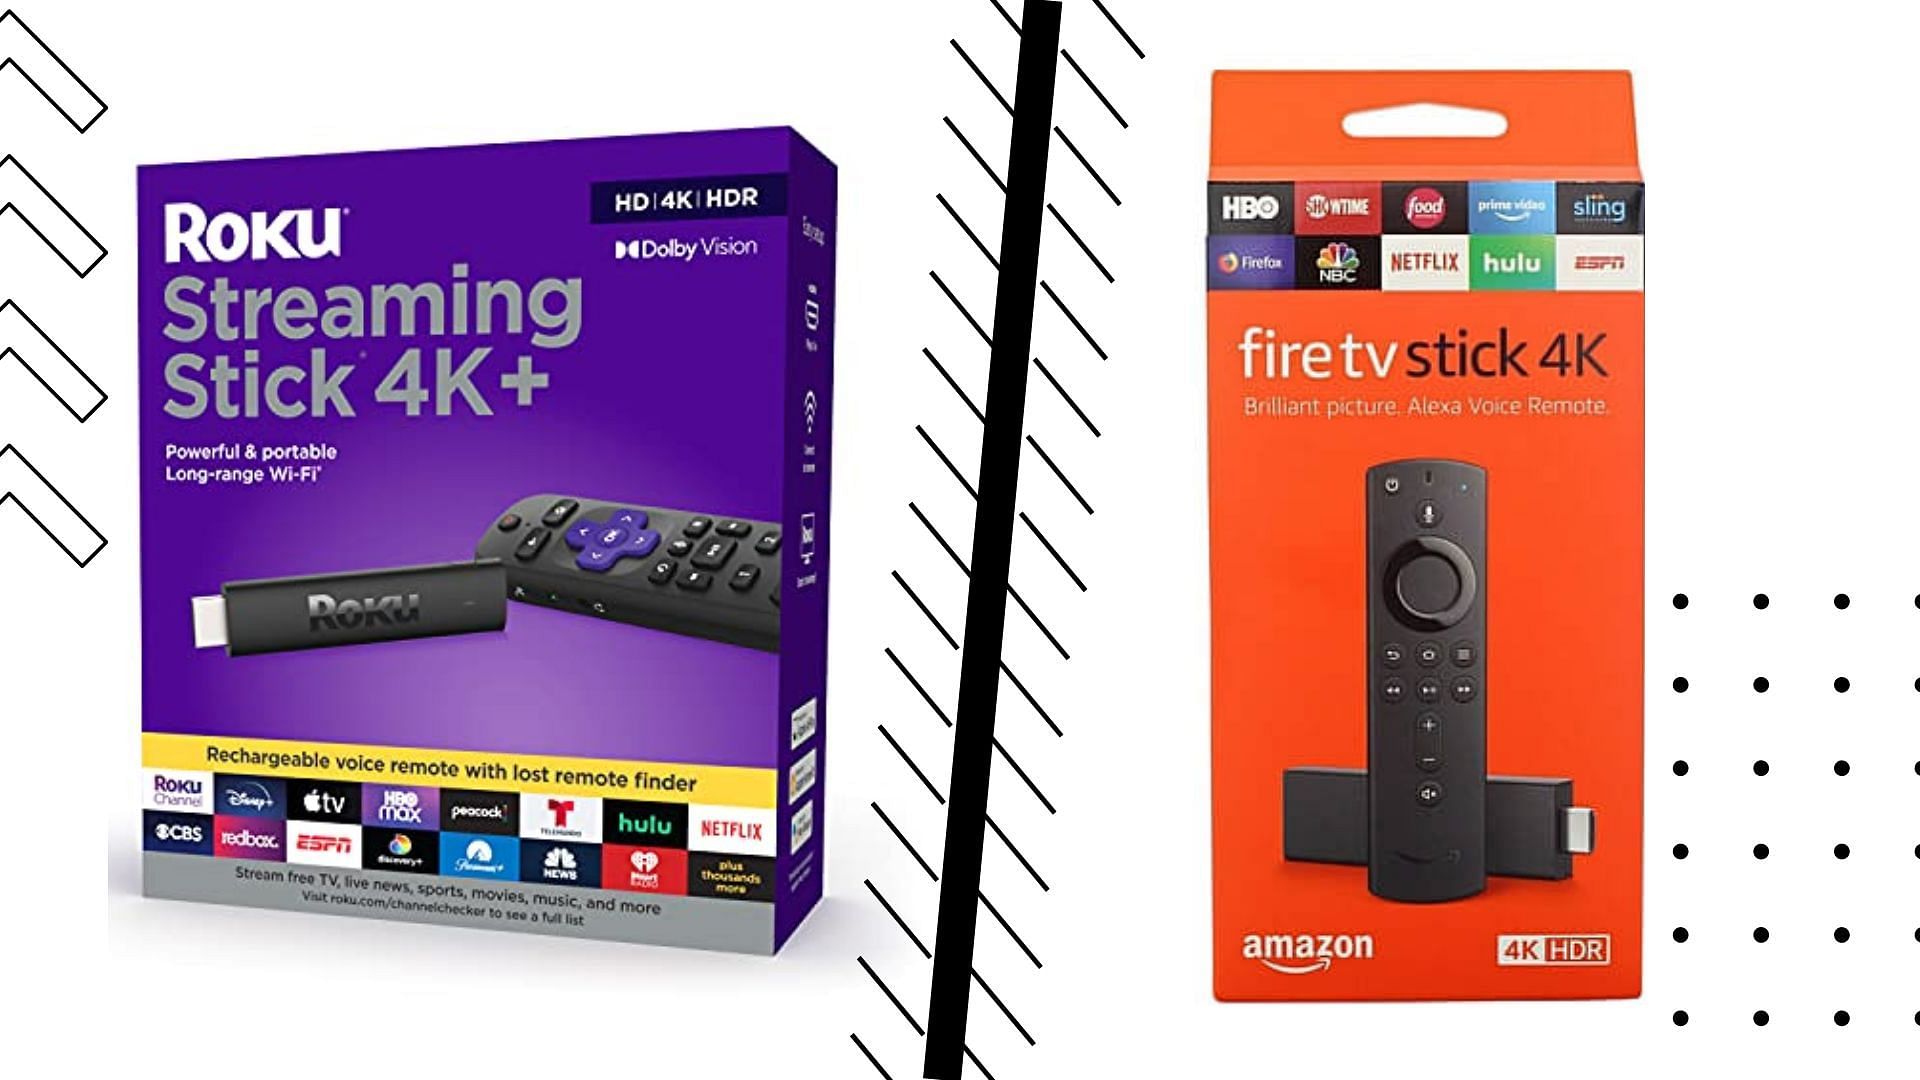 Amazon Fire TV Stick 4K and Roku Streaming Stick 4K (Image via Sportskeeda)